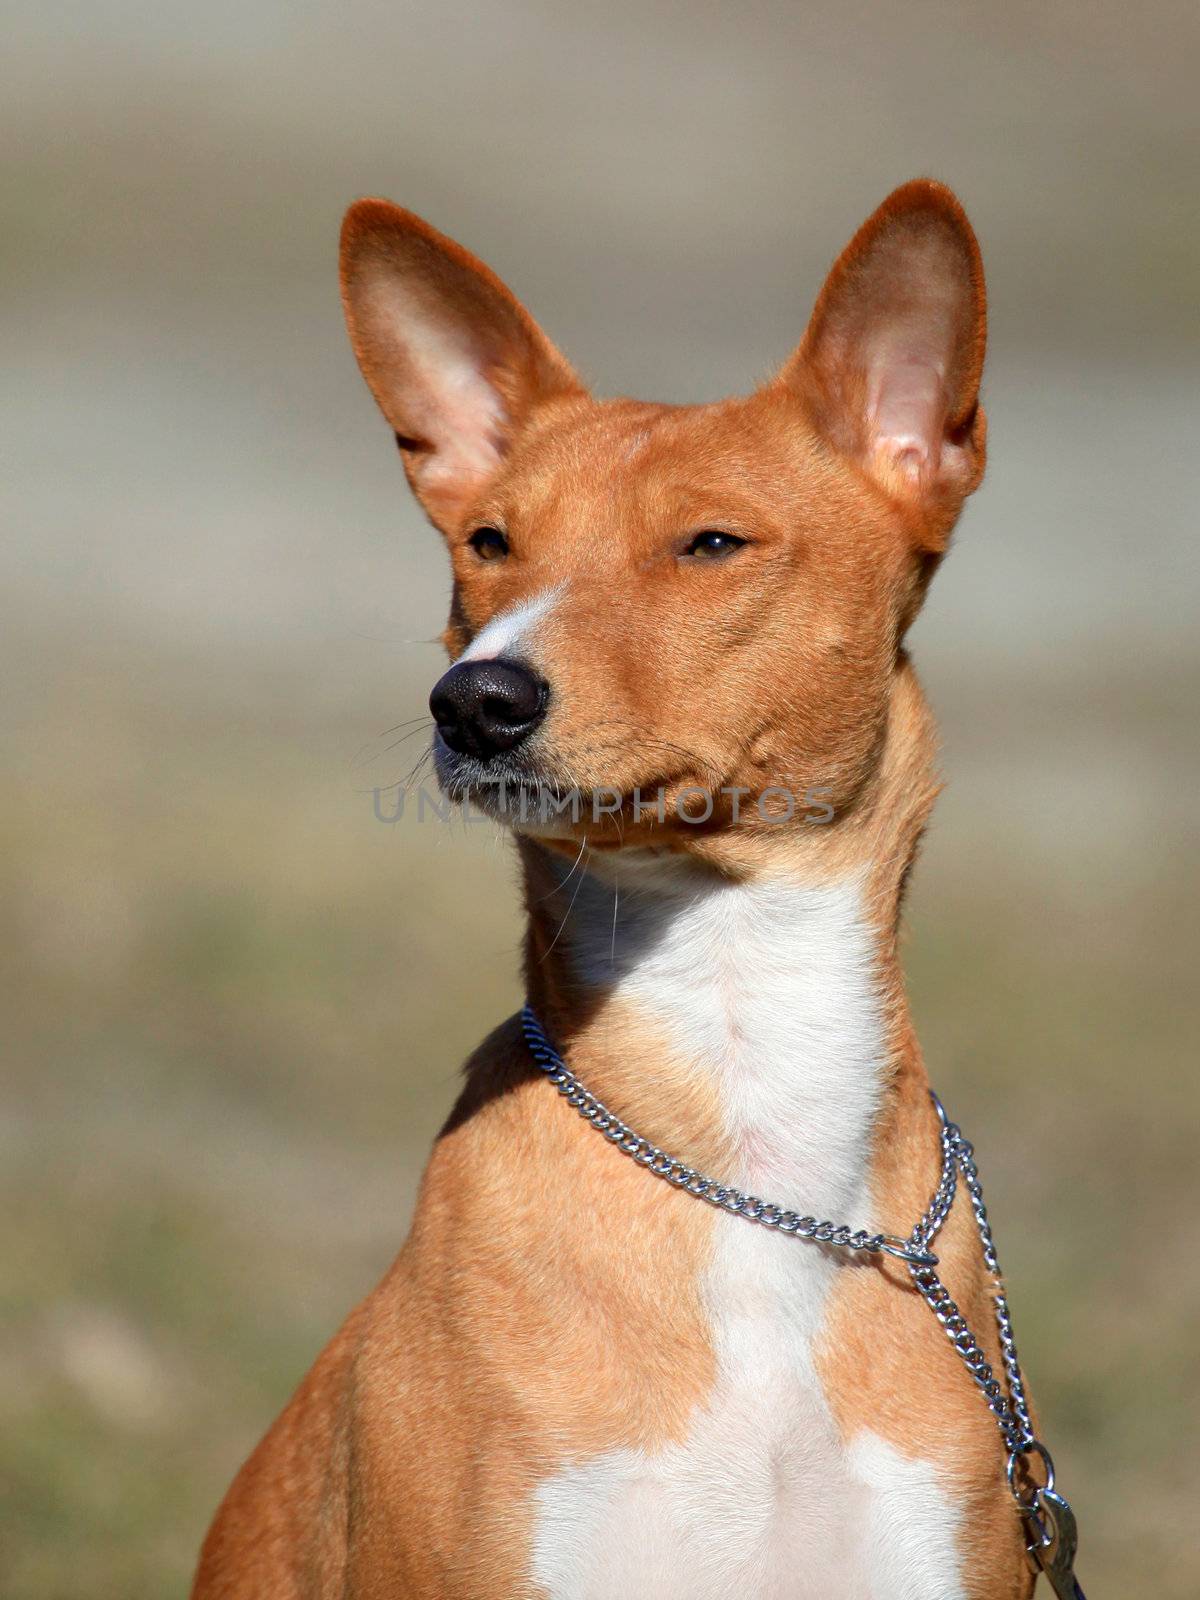 The portrait of Basenji dog